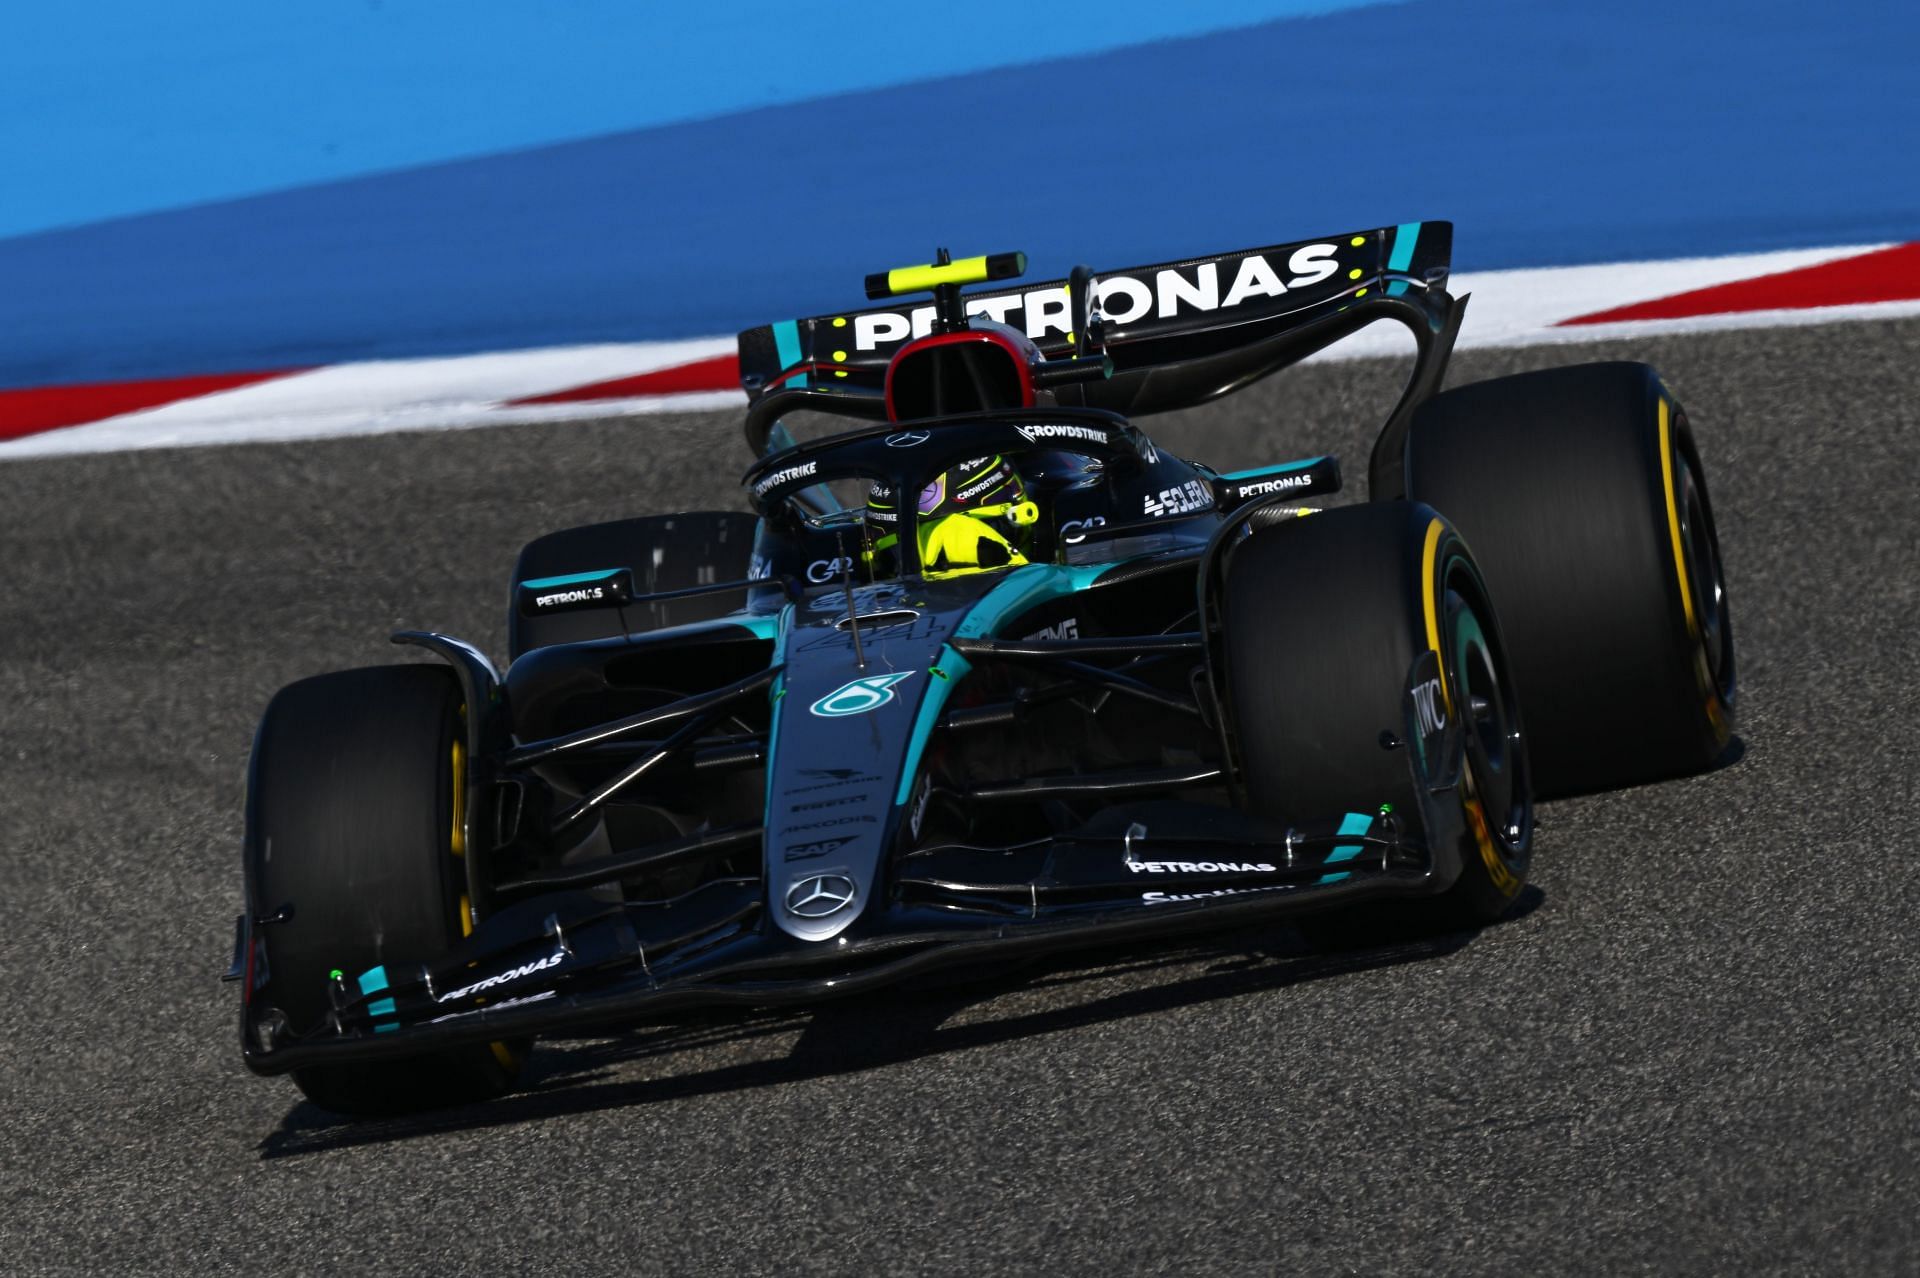 Lewis Hamilton races onto Fortnite's icon series with exclusive